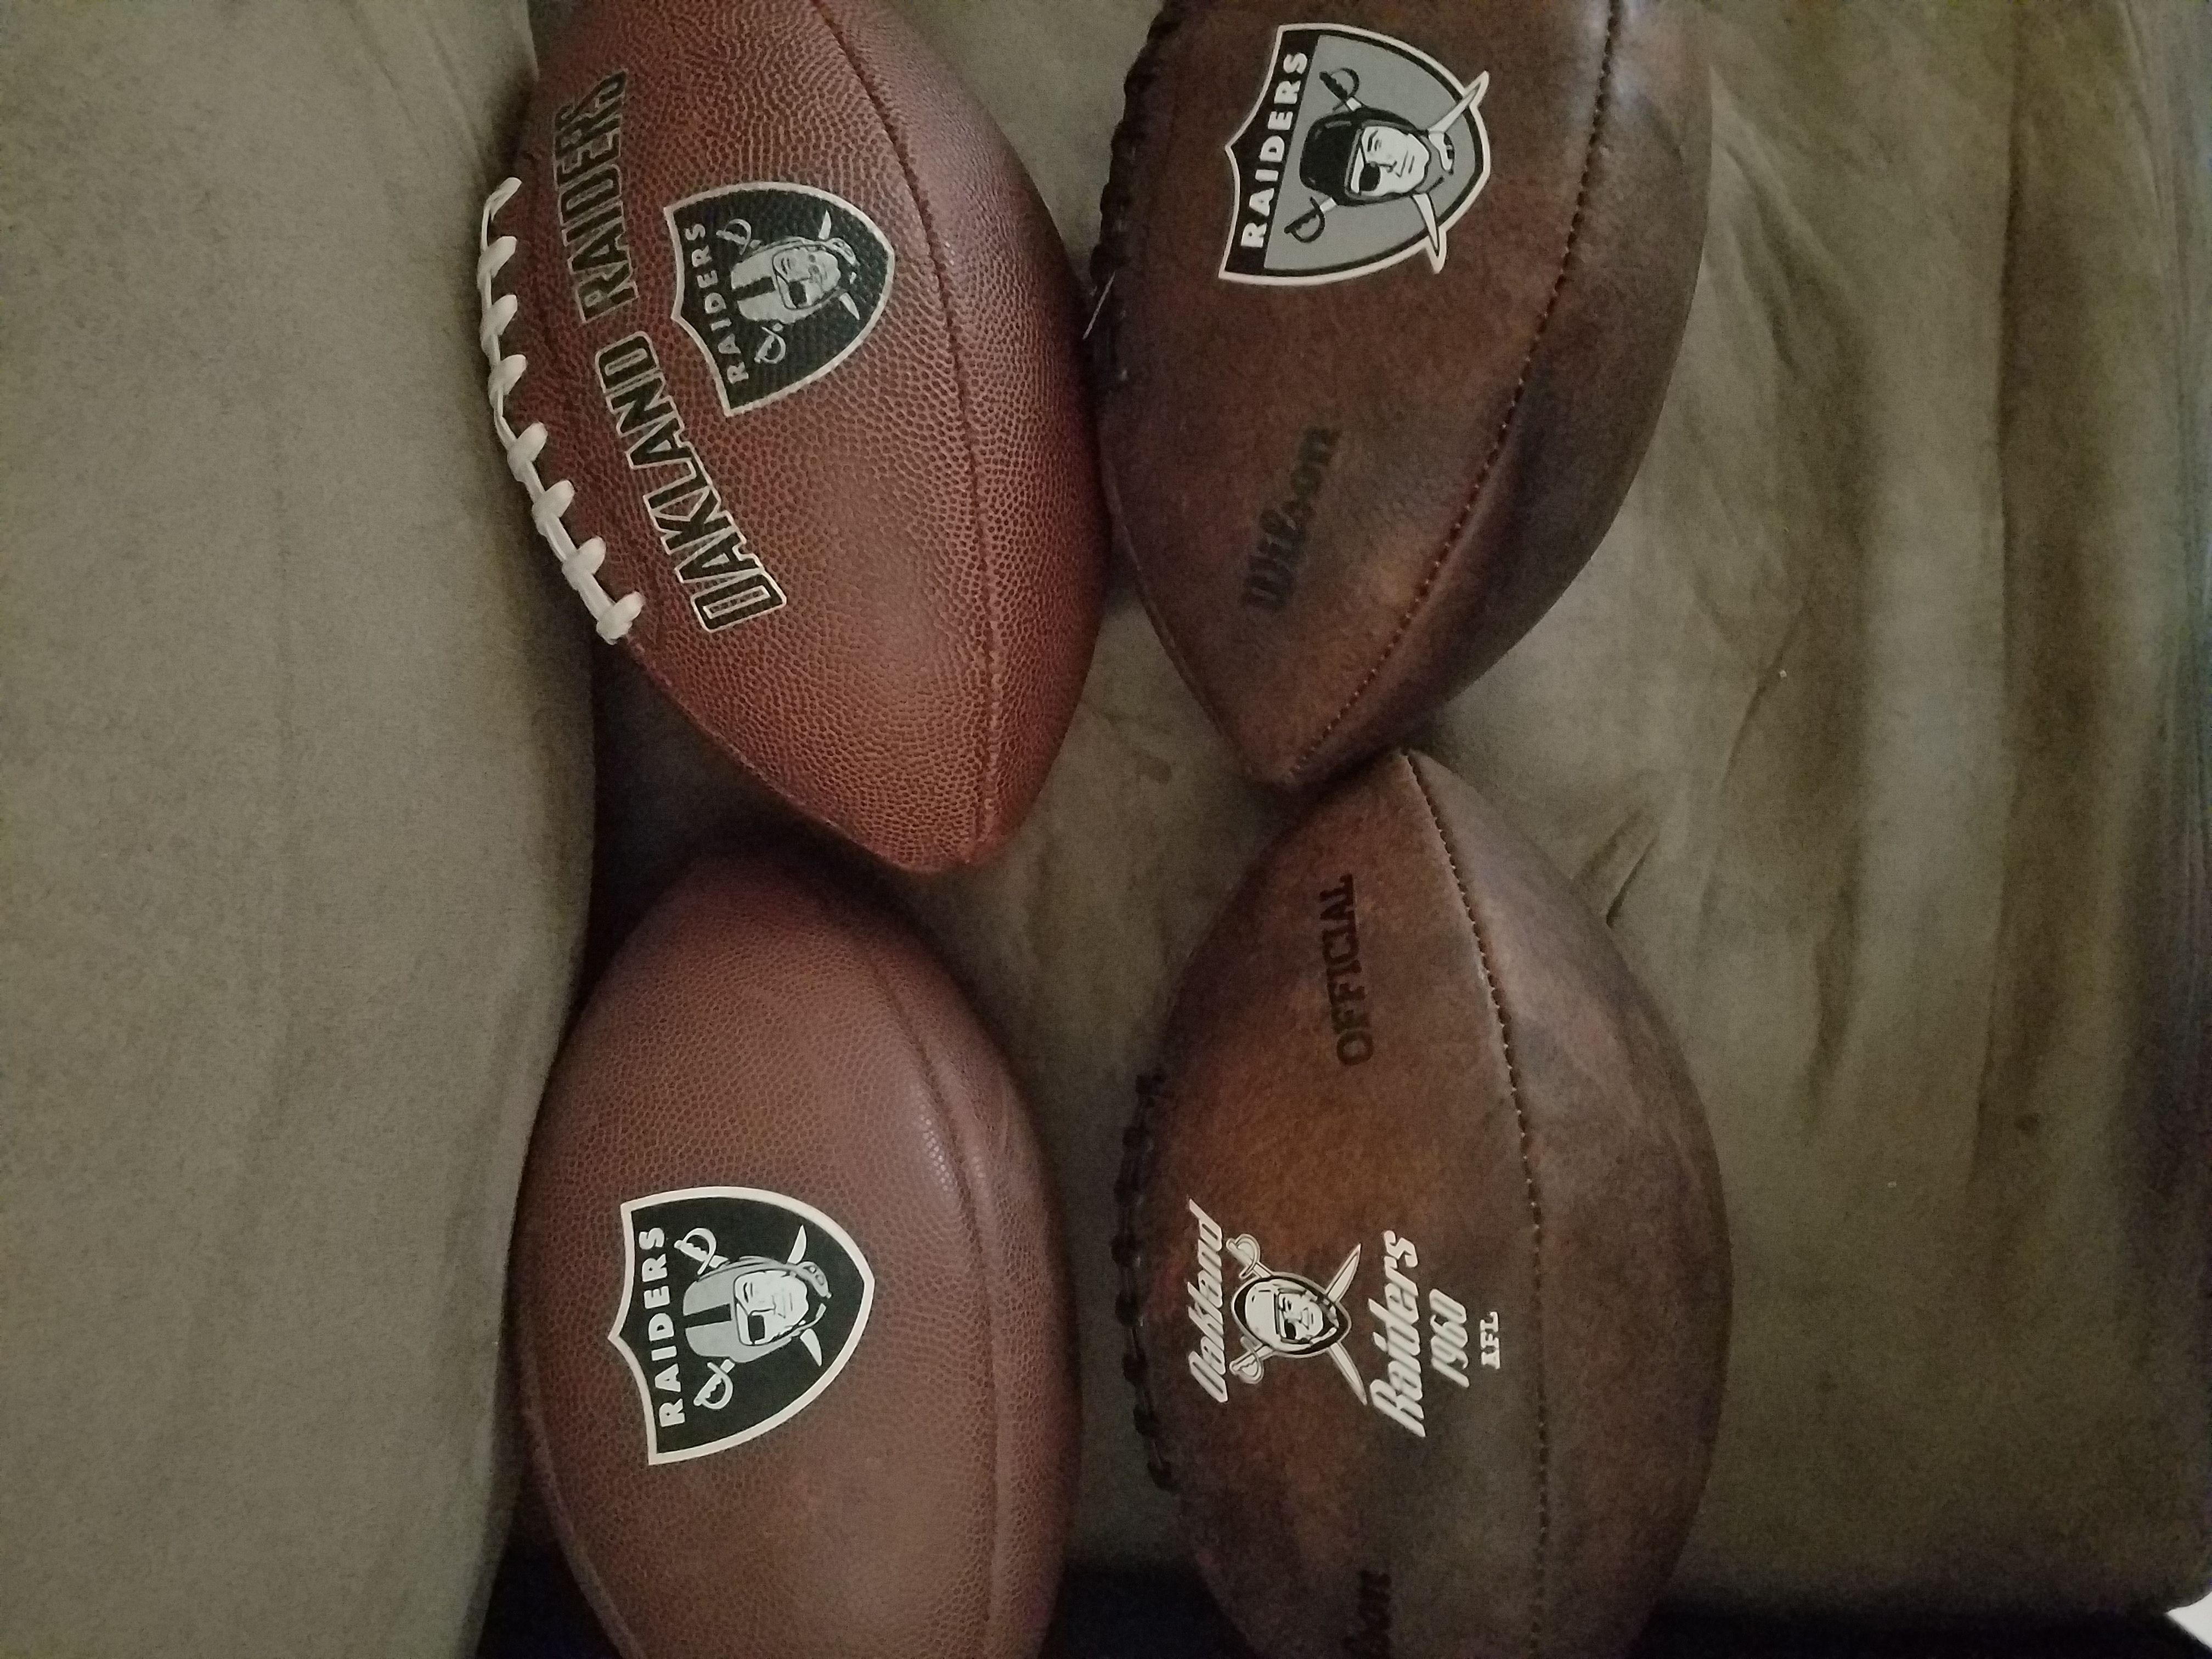 raiders full size footballs